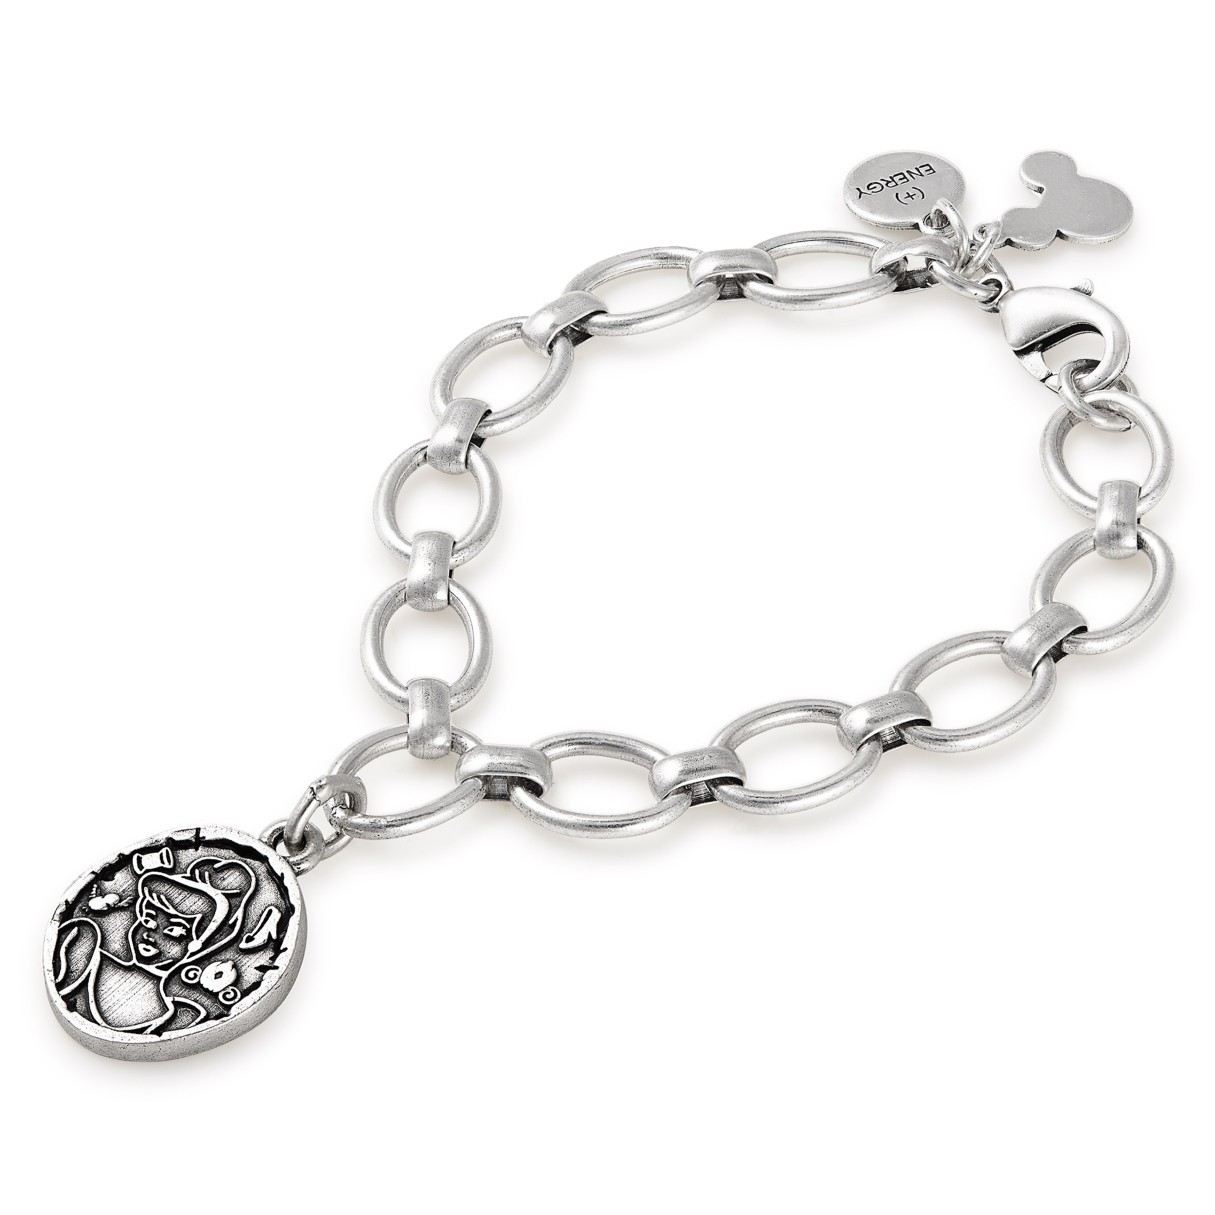 Cinderella Chain Link Bracelet by Alex and Ani | shopDisney